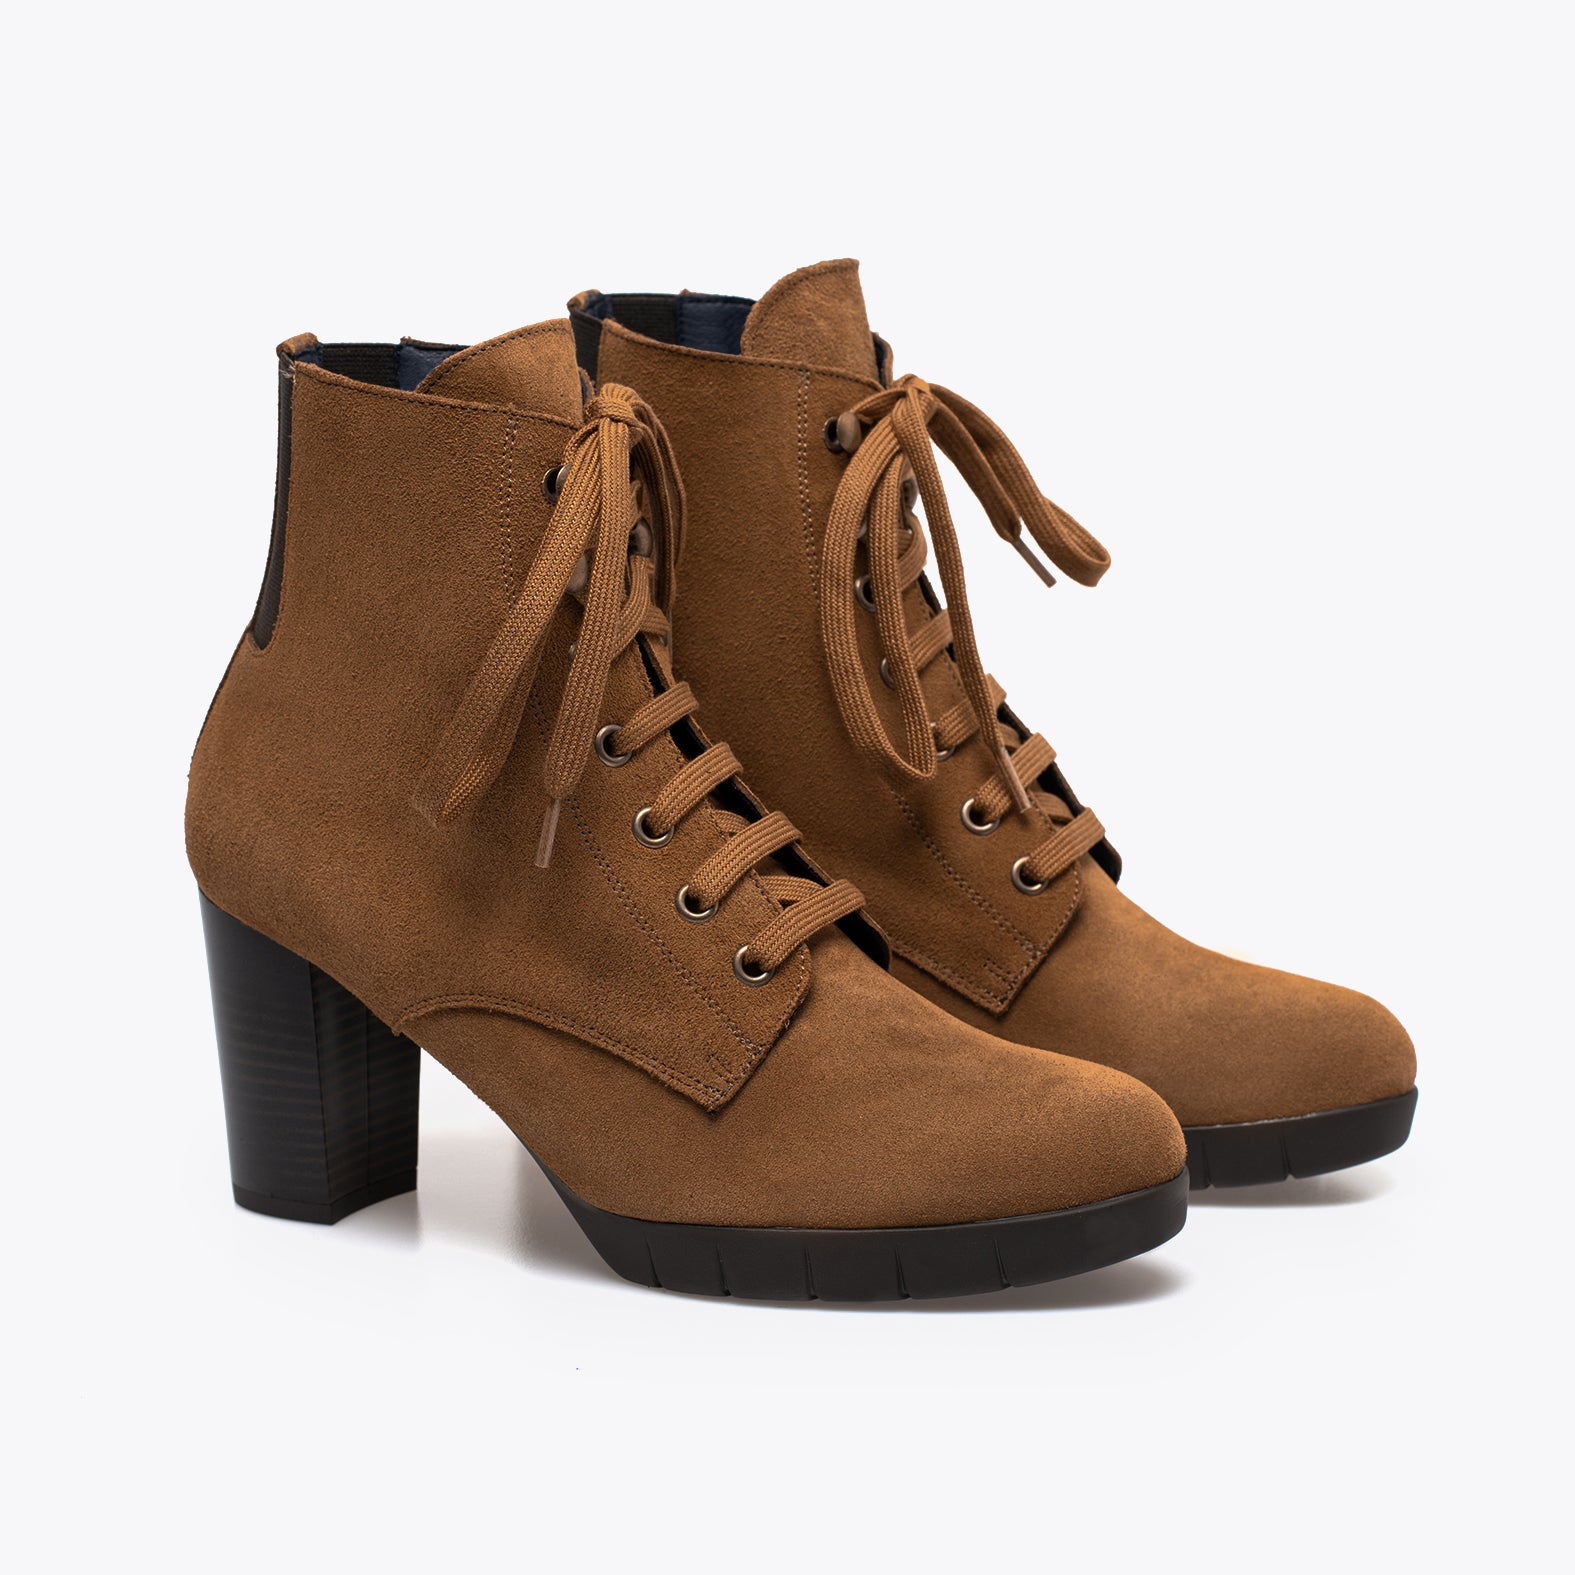 SKINNY - CAMEL high heel ankle boot